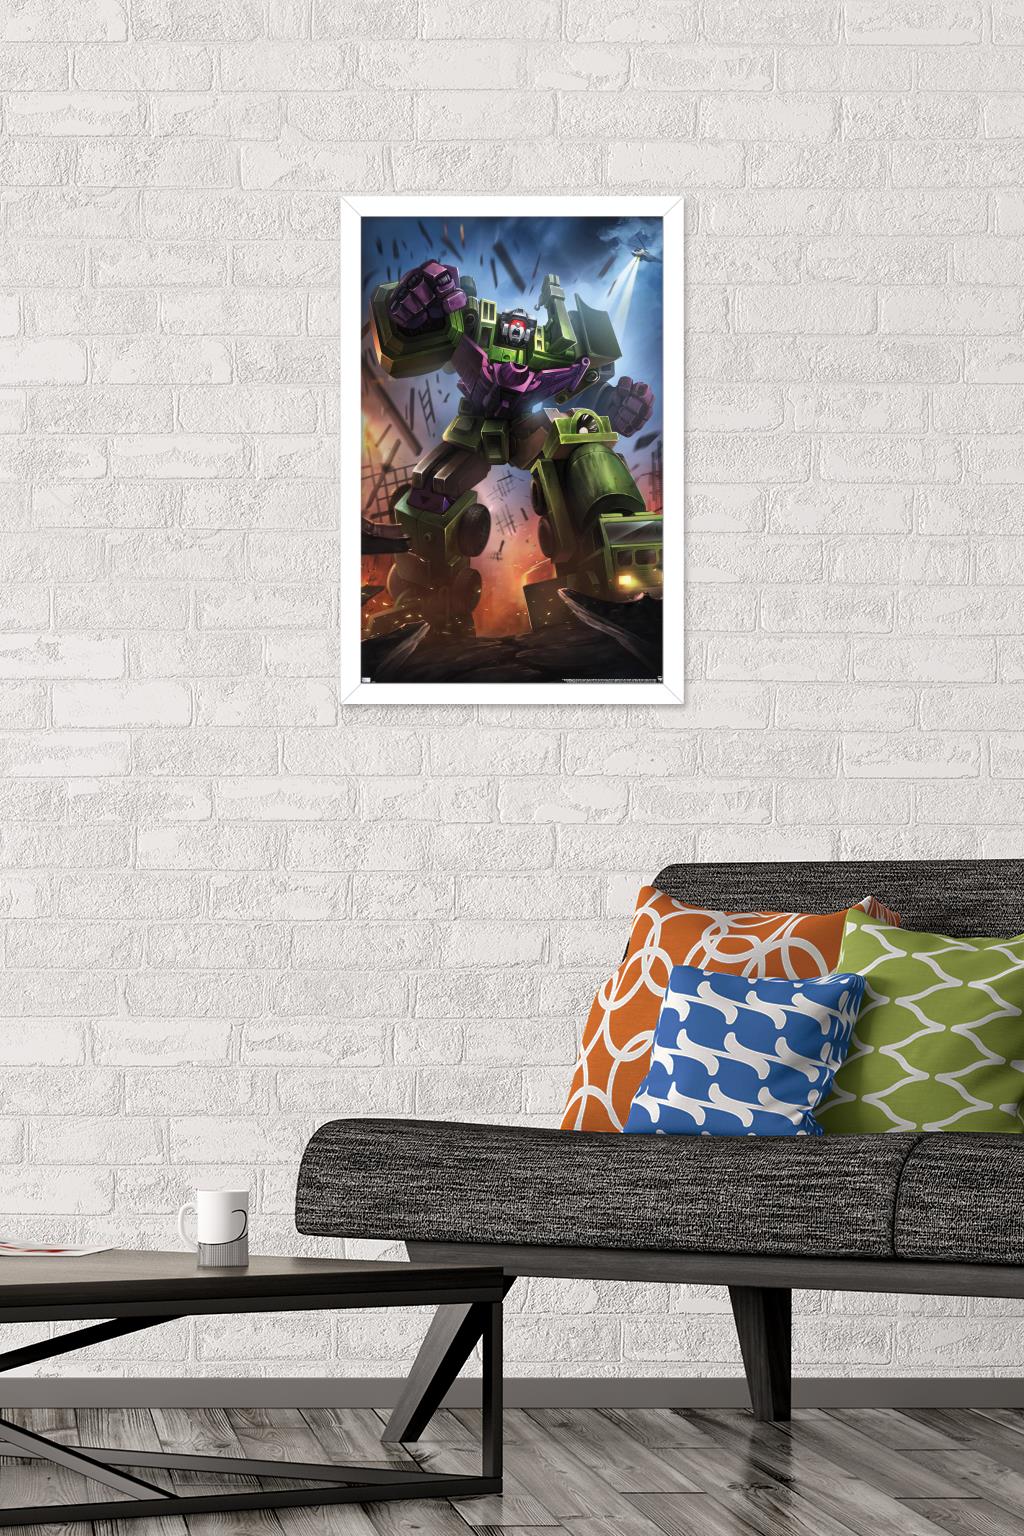 Hasbro Transformers - Devastator Wall Poster, 14.725" x 22.375" Framed - image 2 of 6